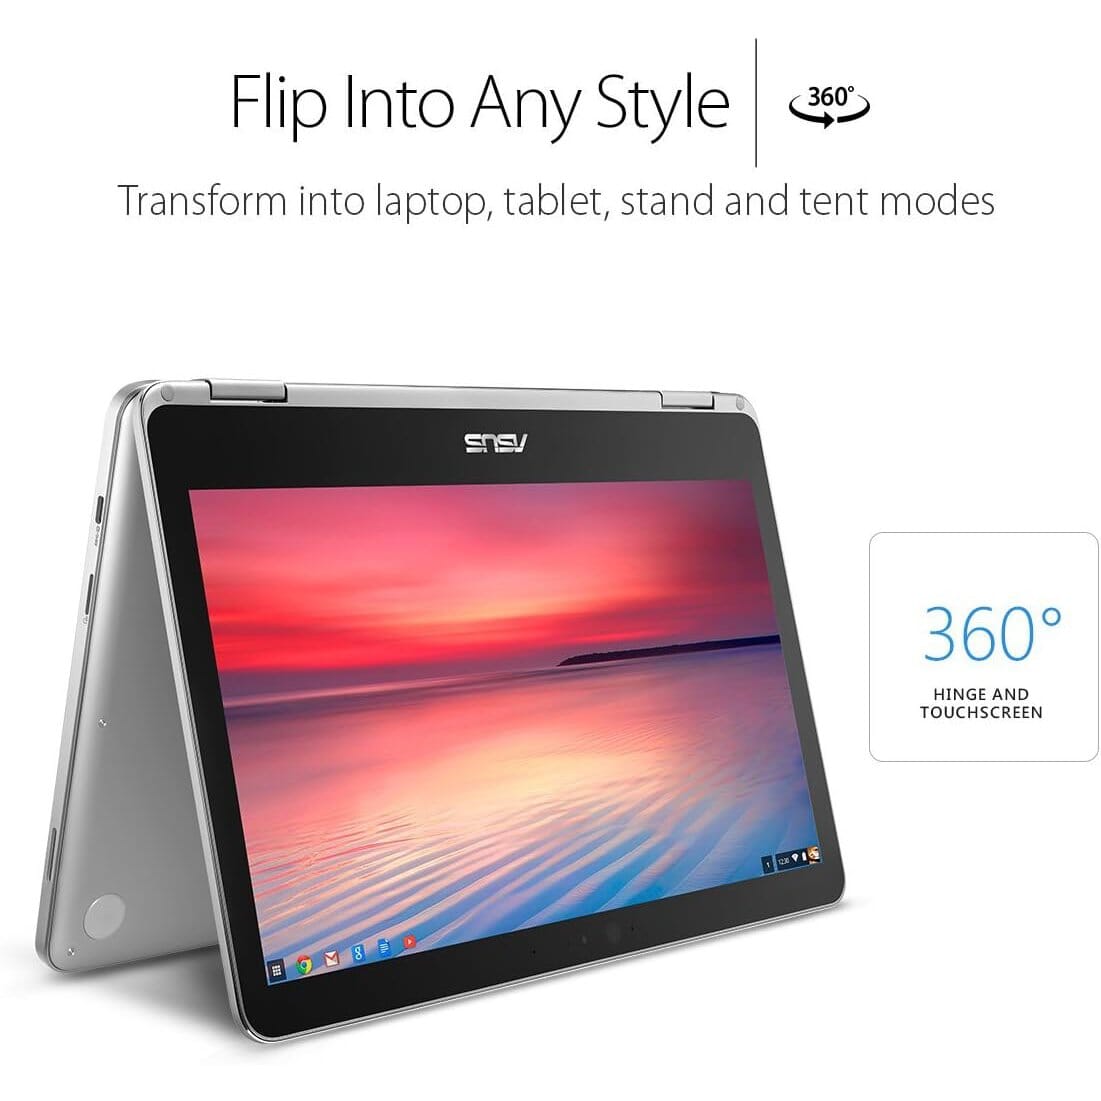 ASUS Chromebook Flip C302CA-DH54 12.5-inch Touchscreen Convertible Chromebook (Refurbished)